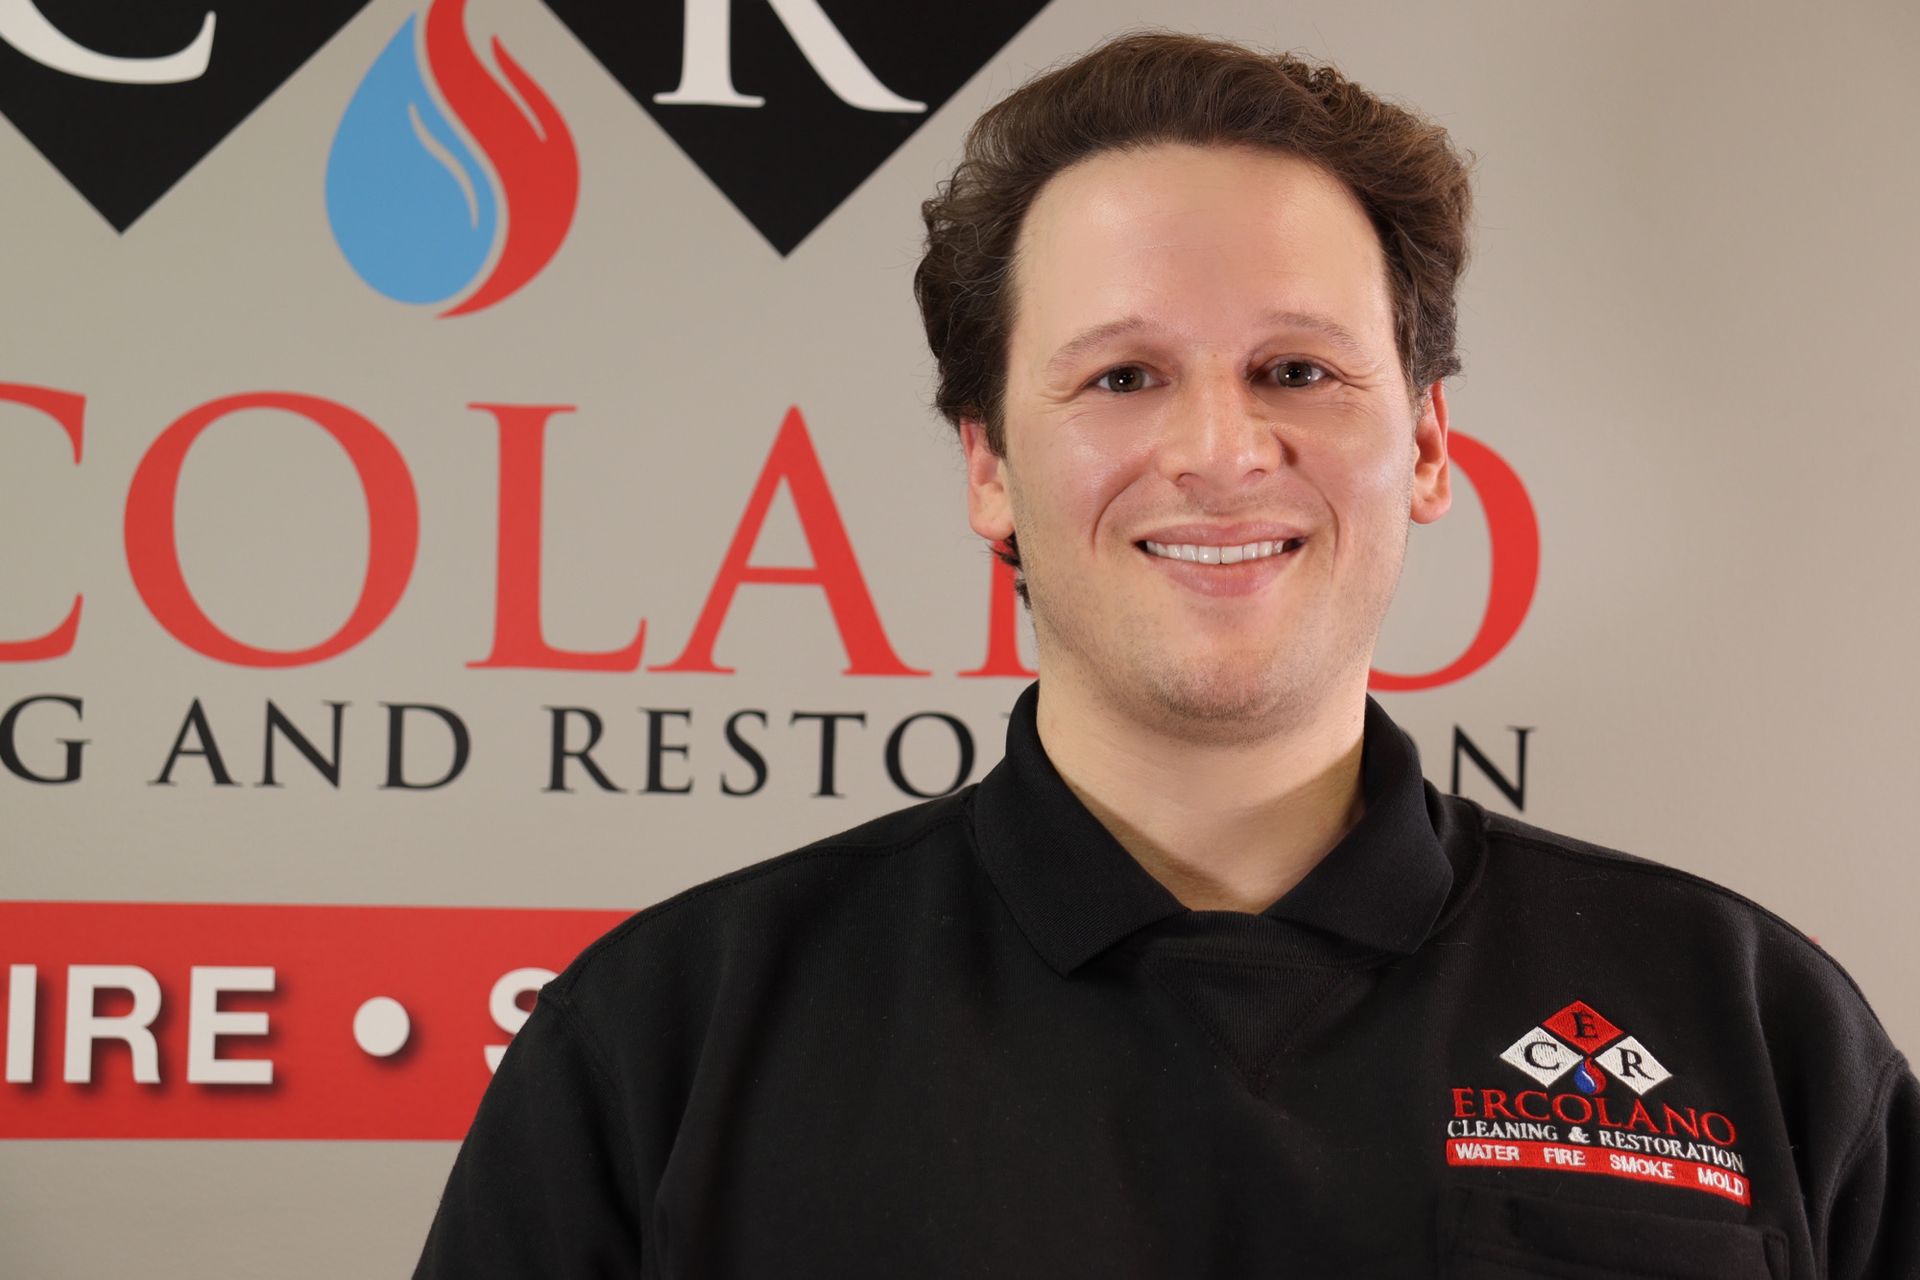 Joe Ercolano | Owener of Ercolano Cleaning and Restoration